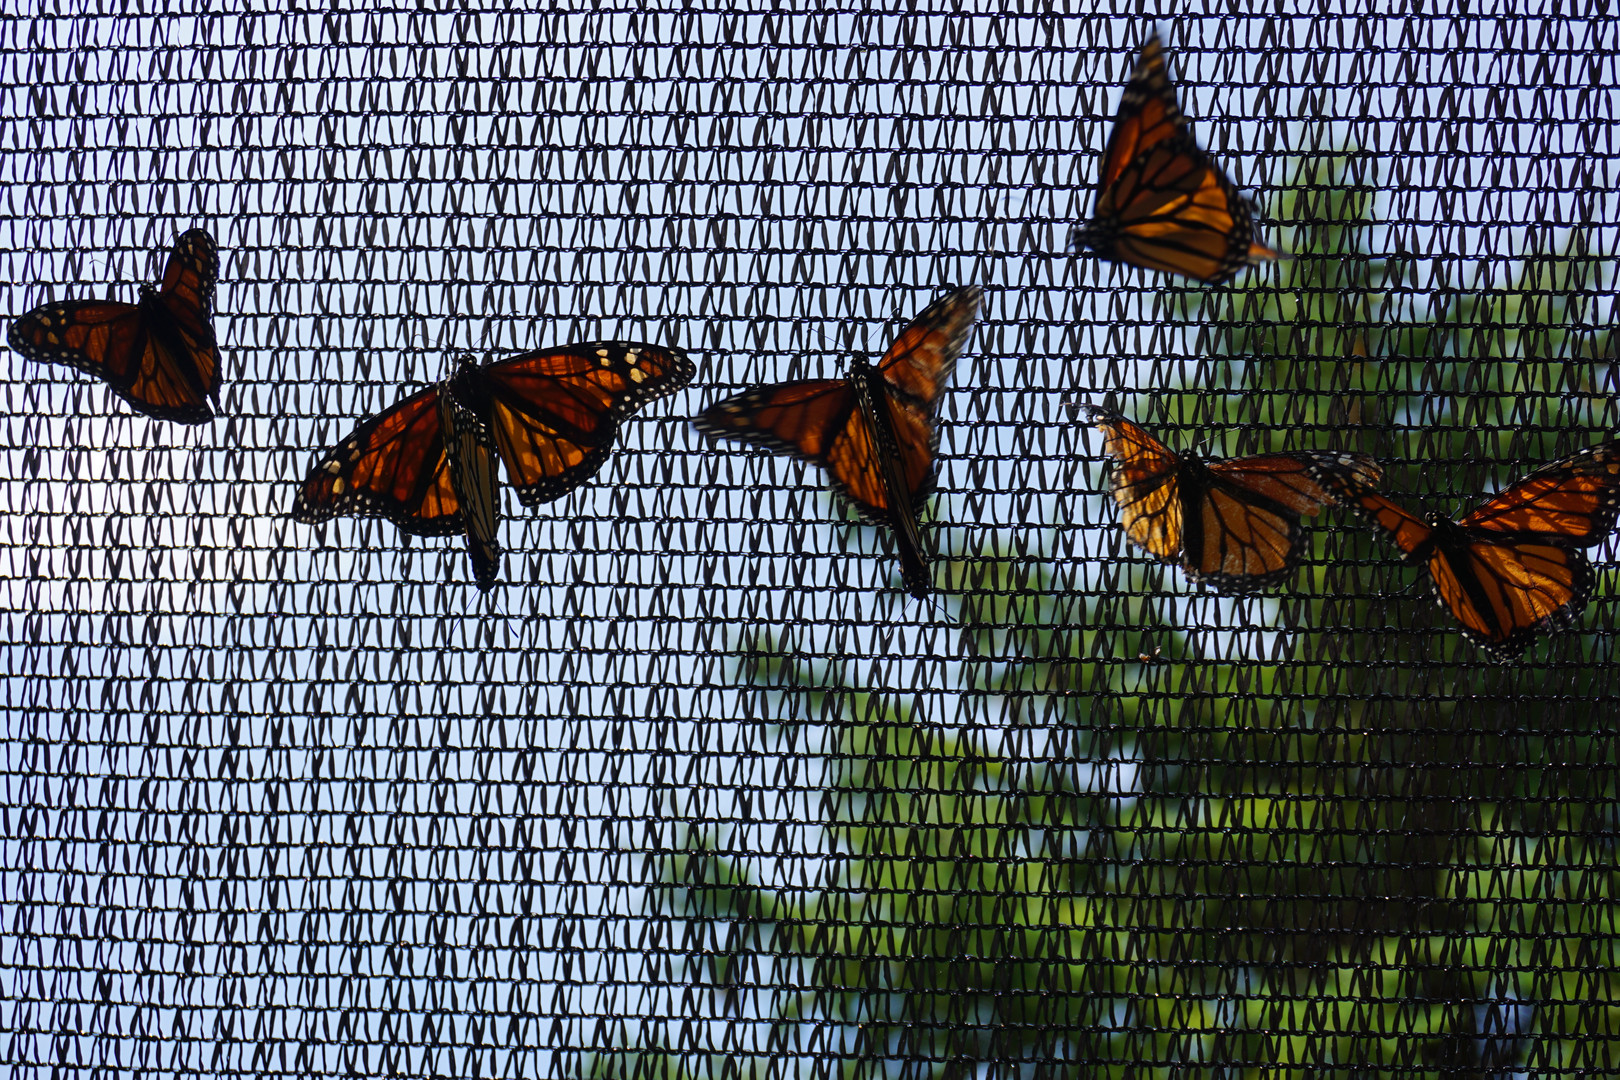 Butterflies synchron ;-)